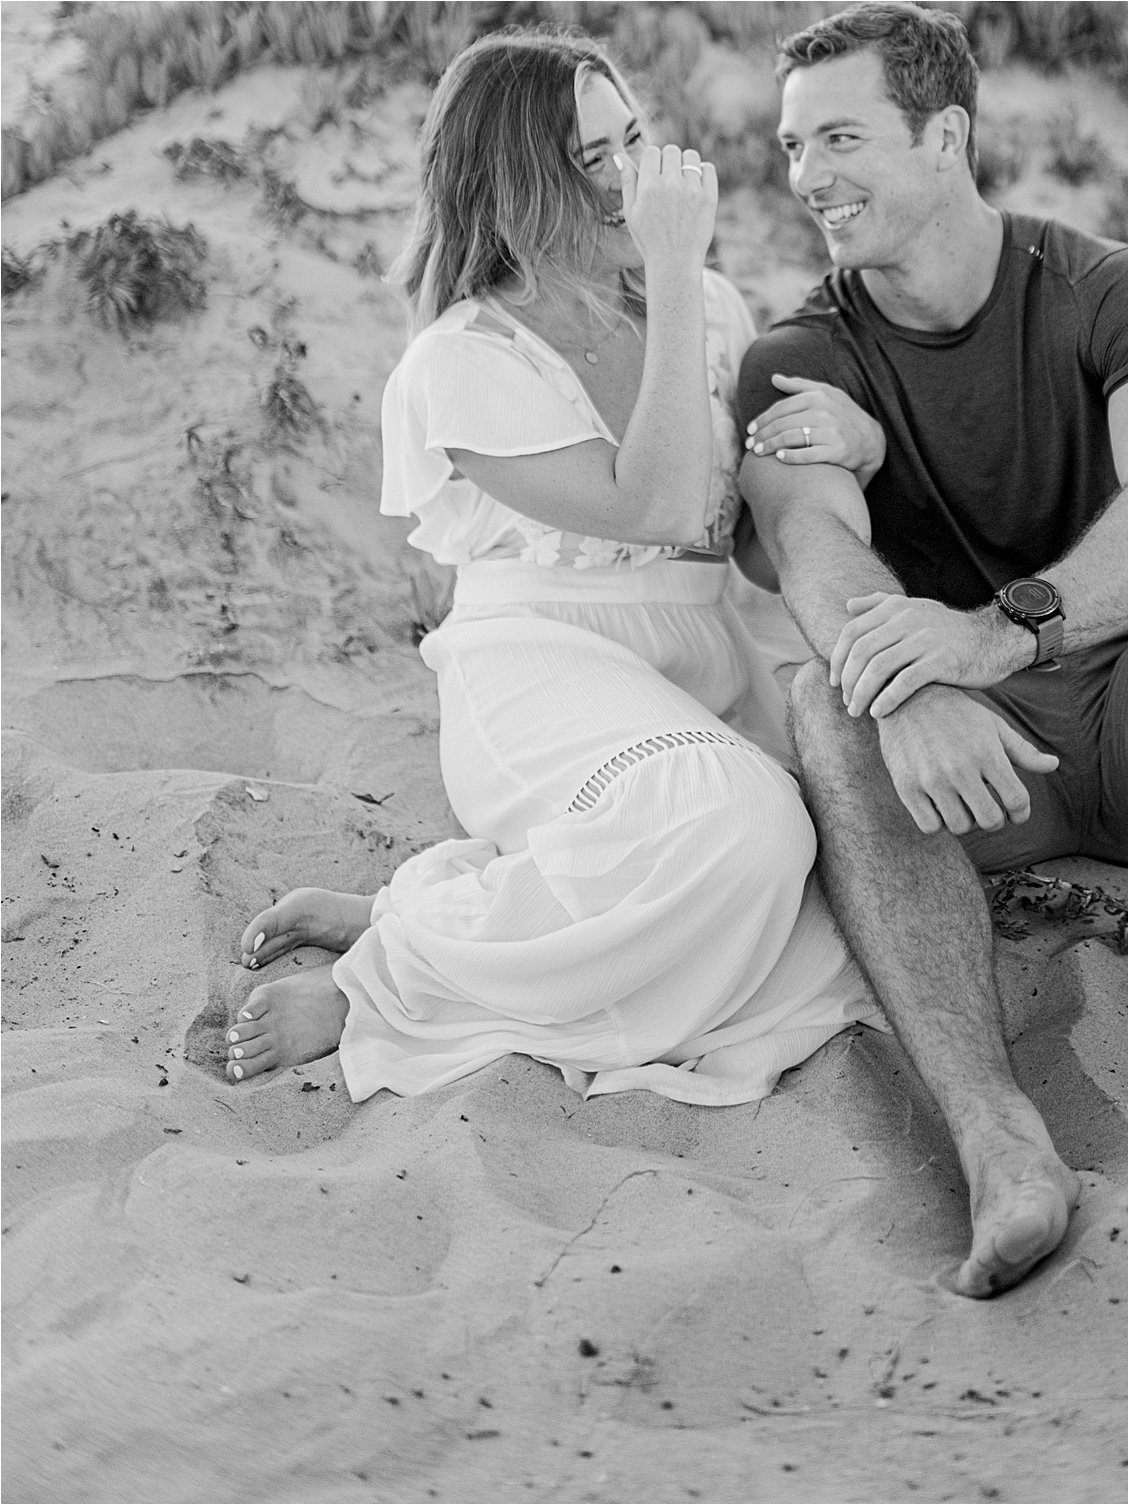 Playful Coronado Island Beach Engagement Session with Southern California and Destination Film Wedding Photographer, Renee Hollingshead